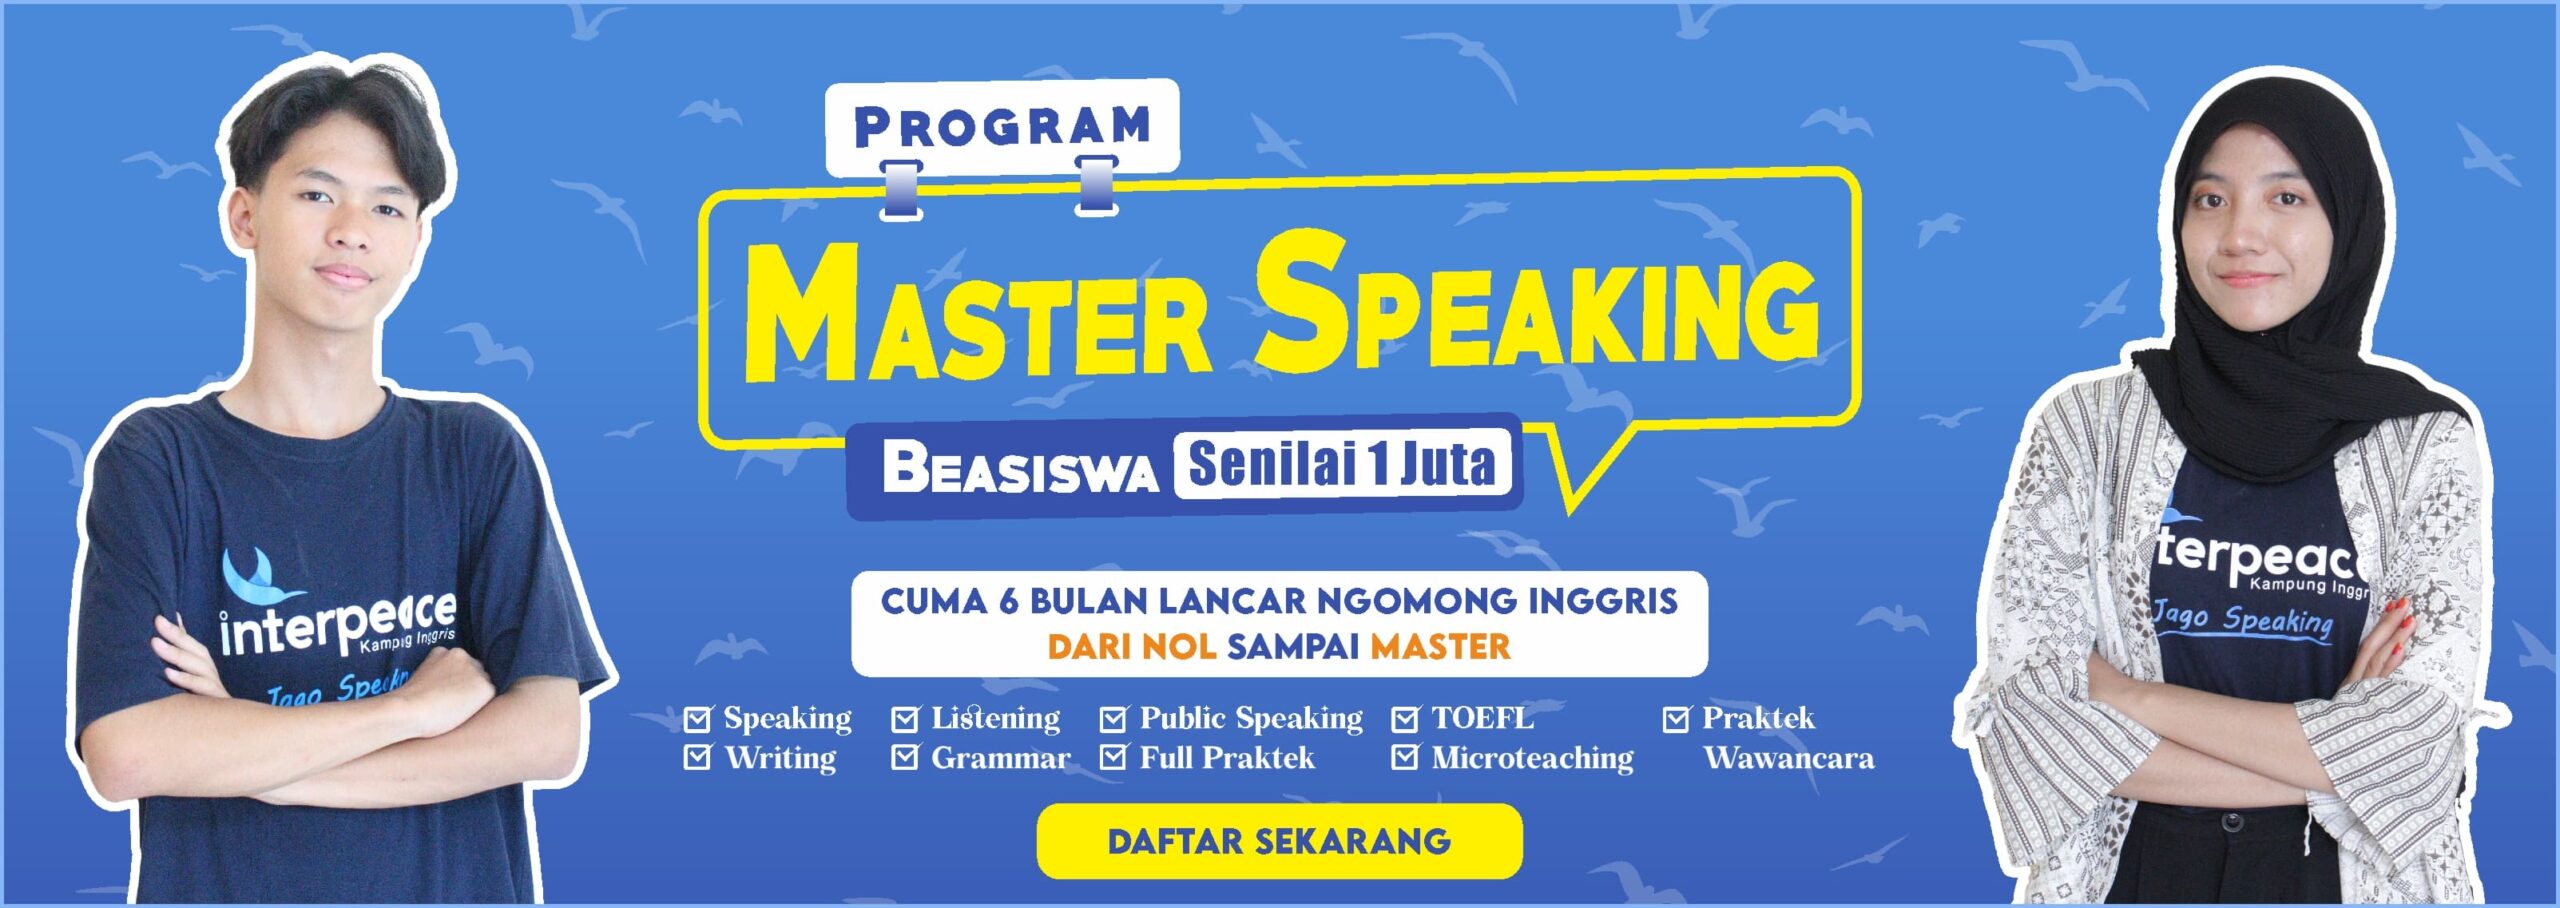 master speaking